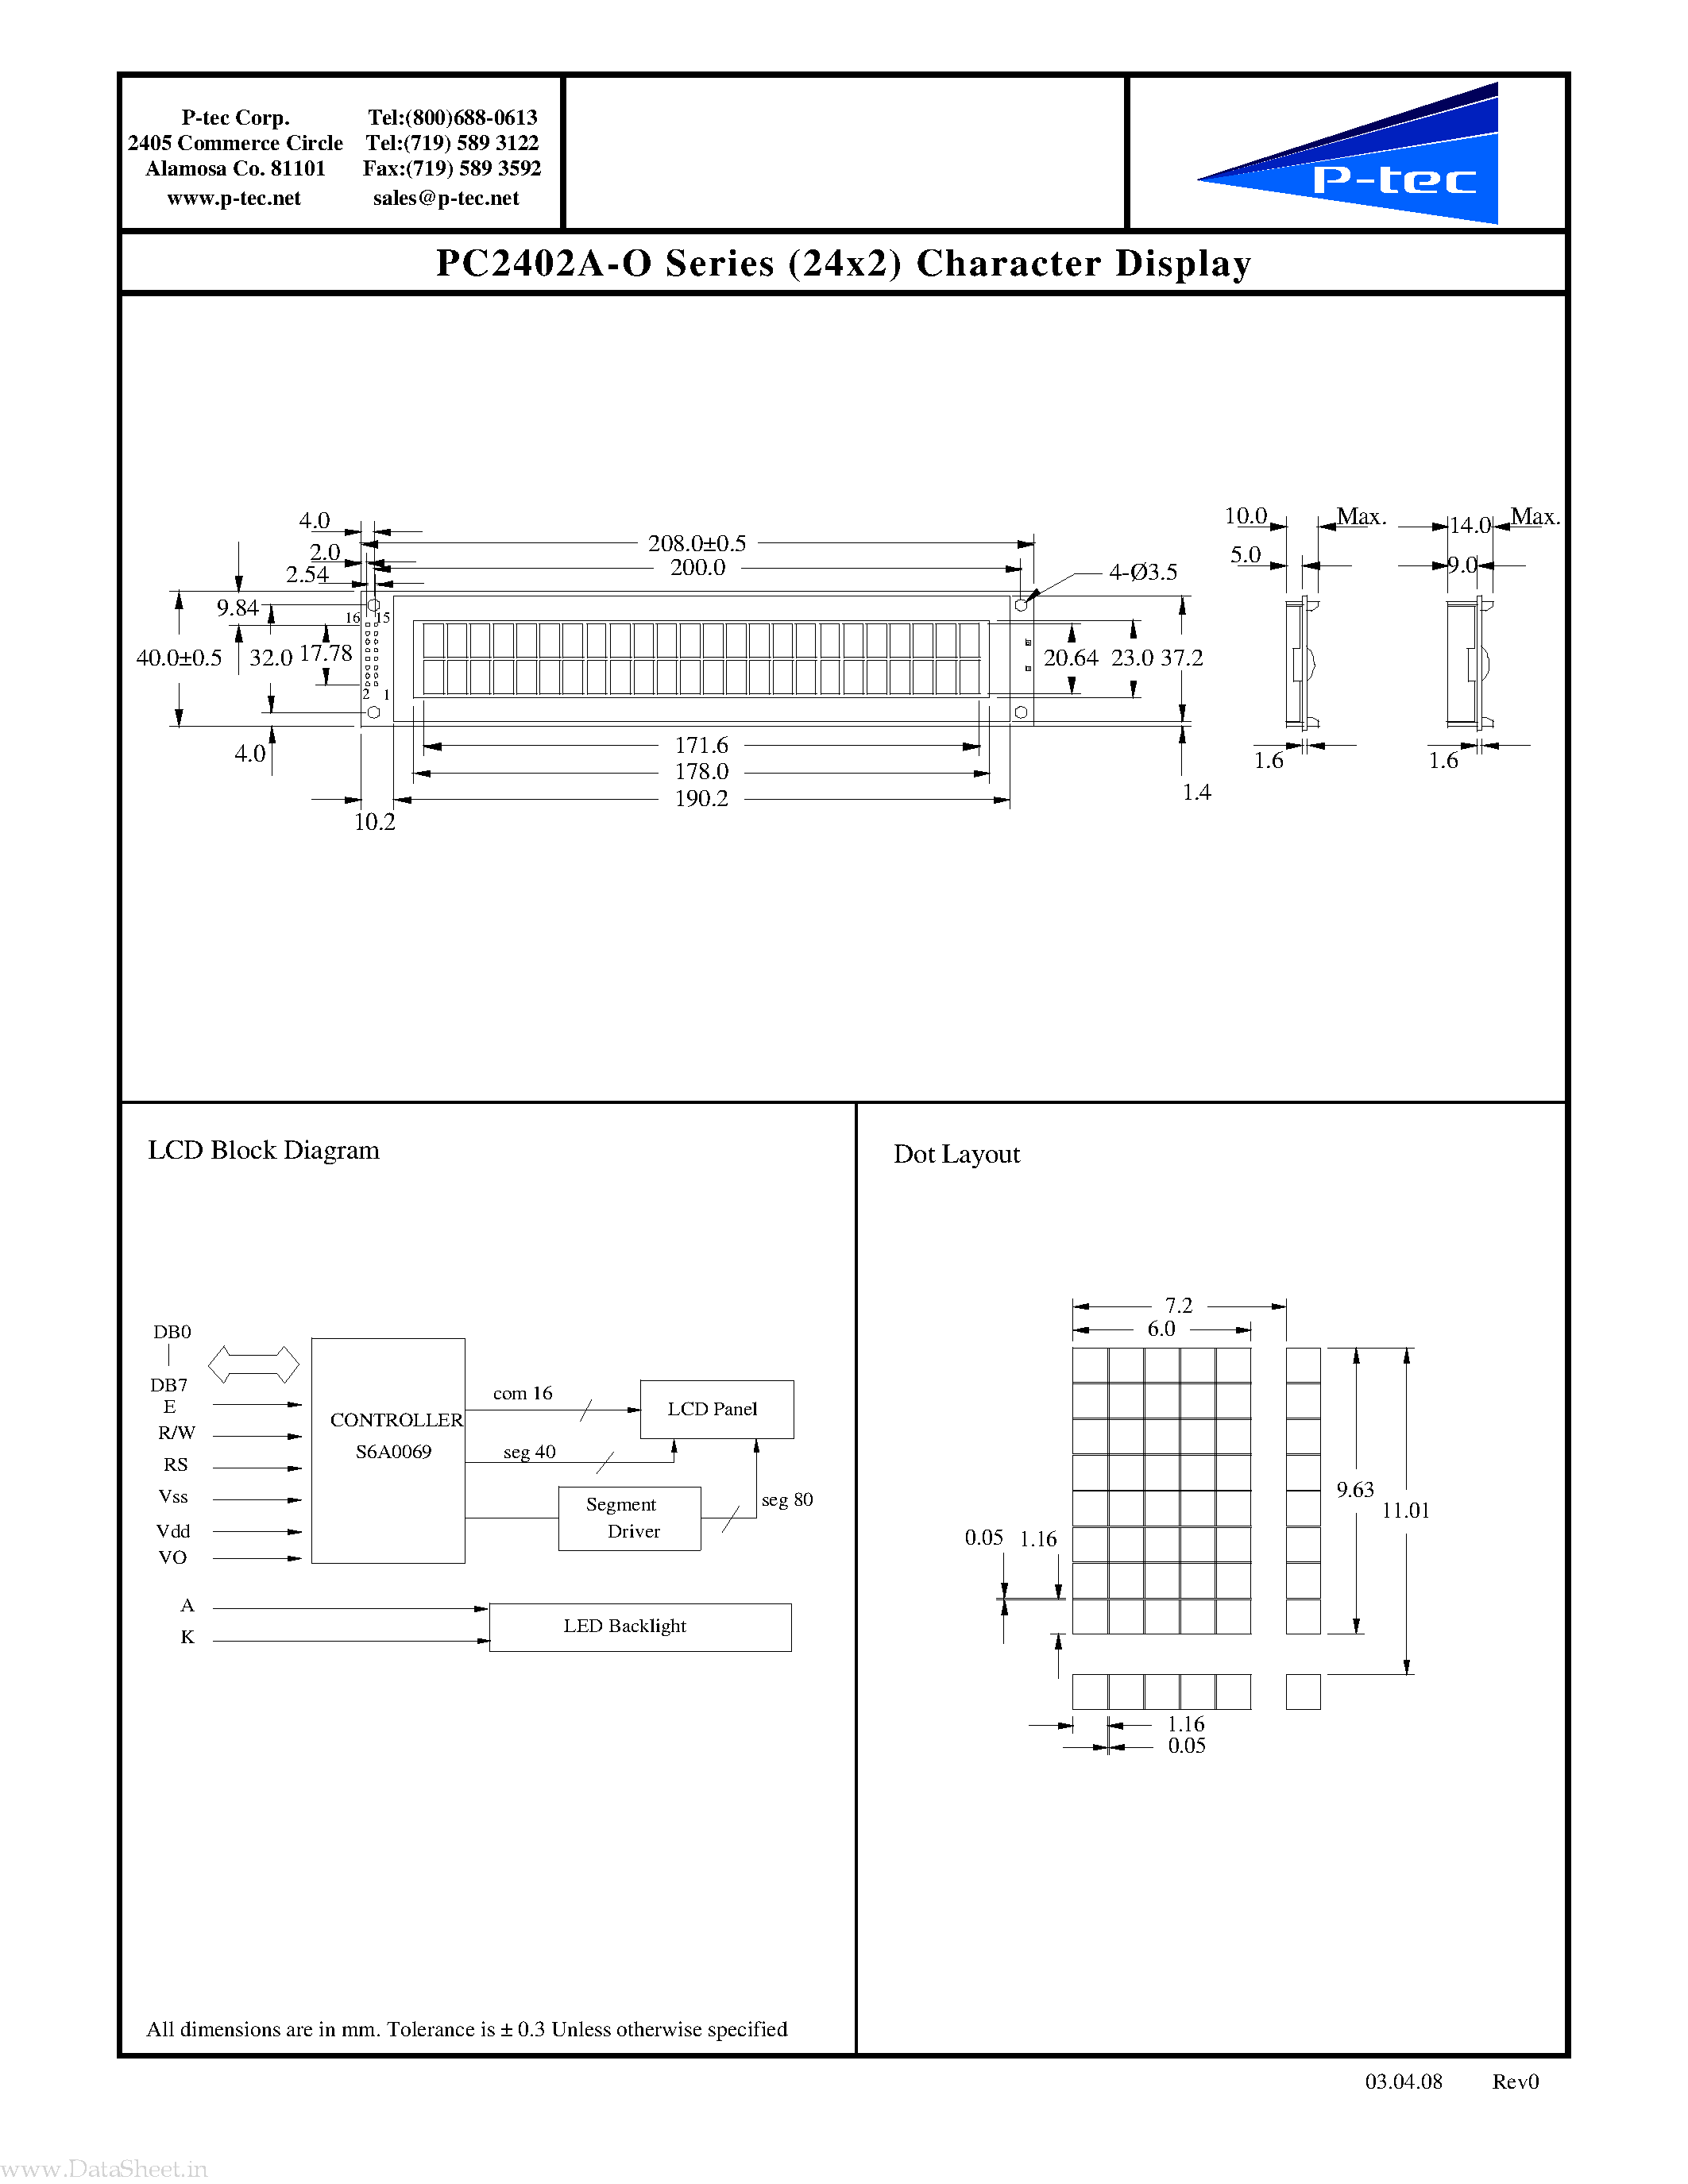 Datasheet PC2402A-O - Character Display page 2